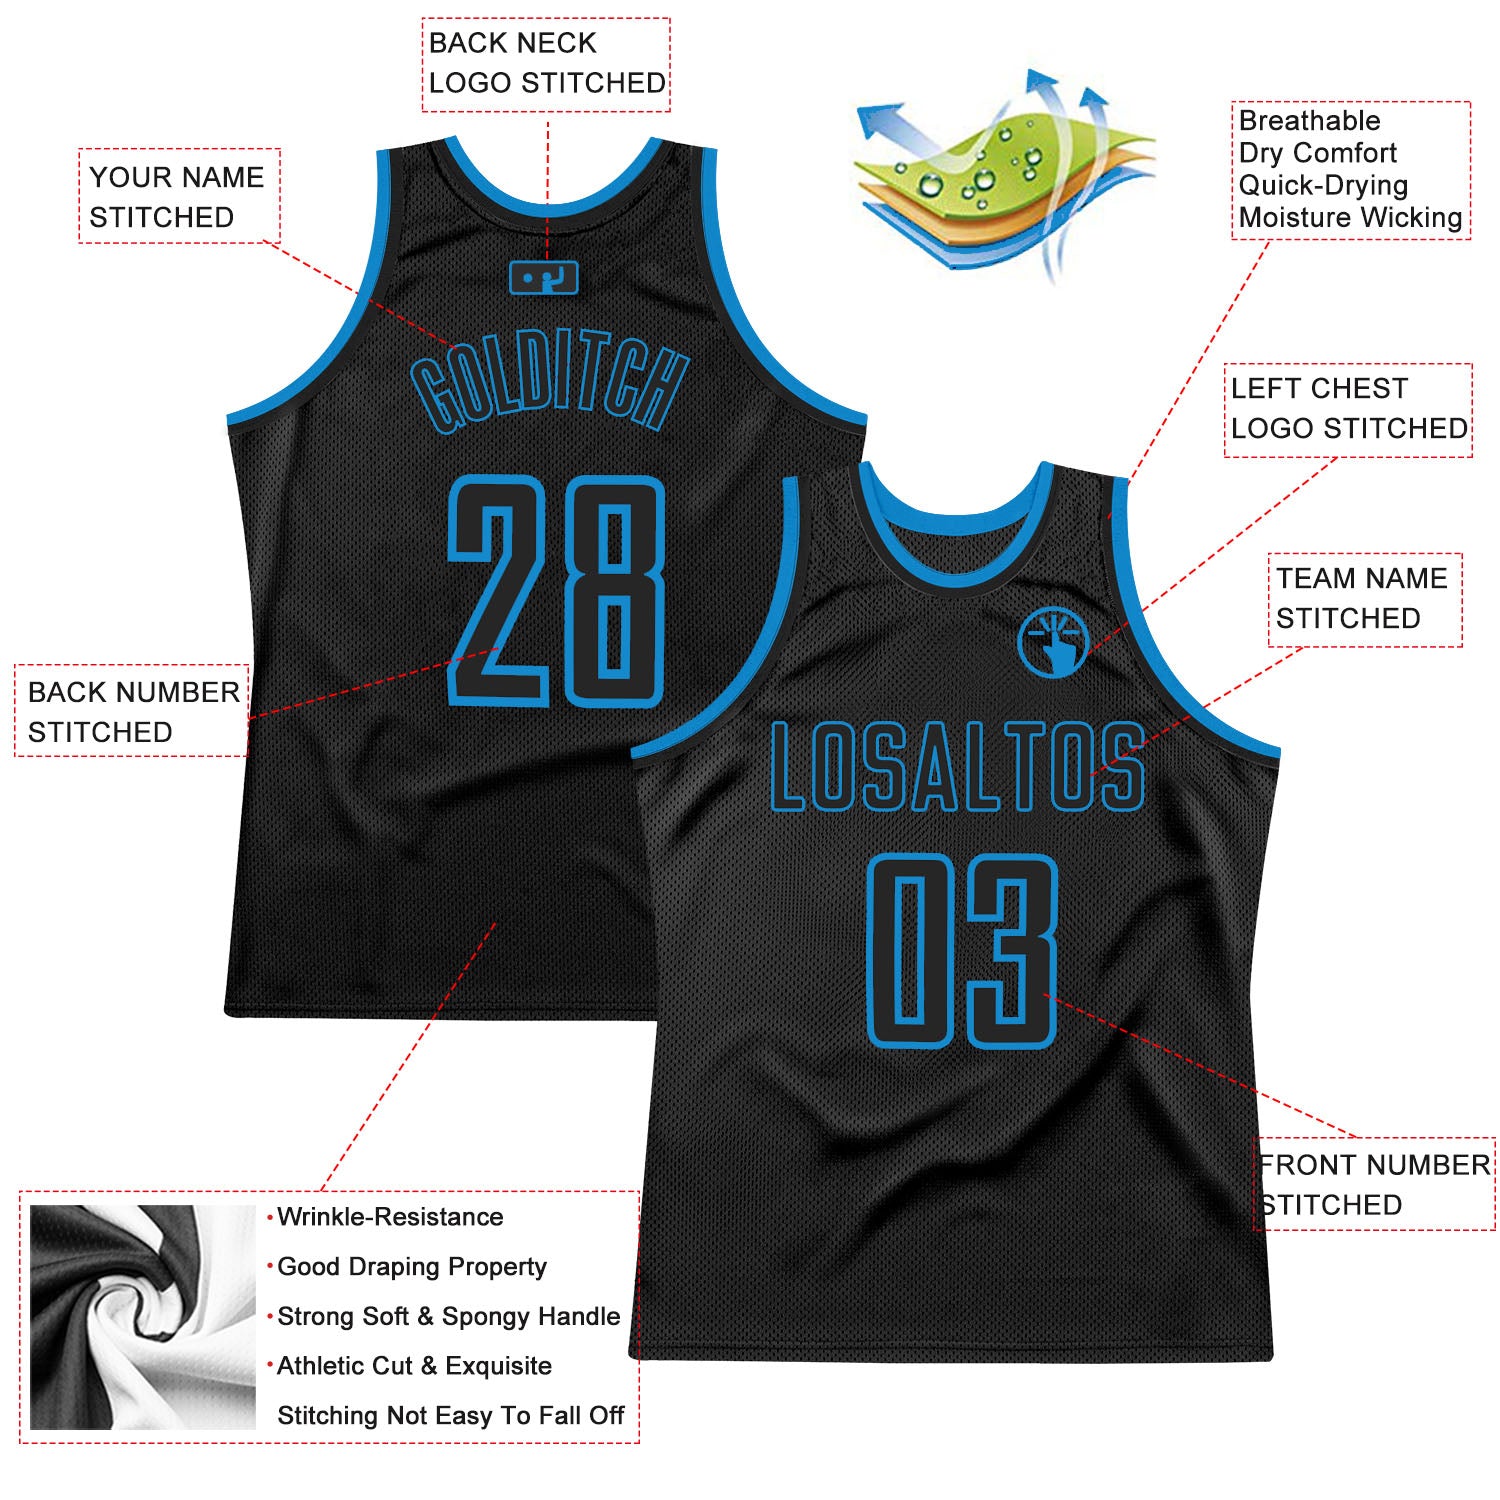 black and blue jersey design